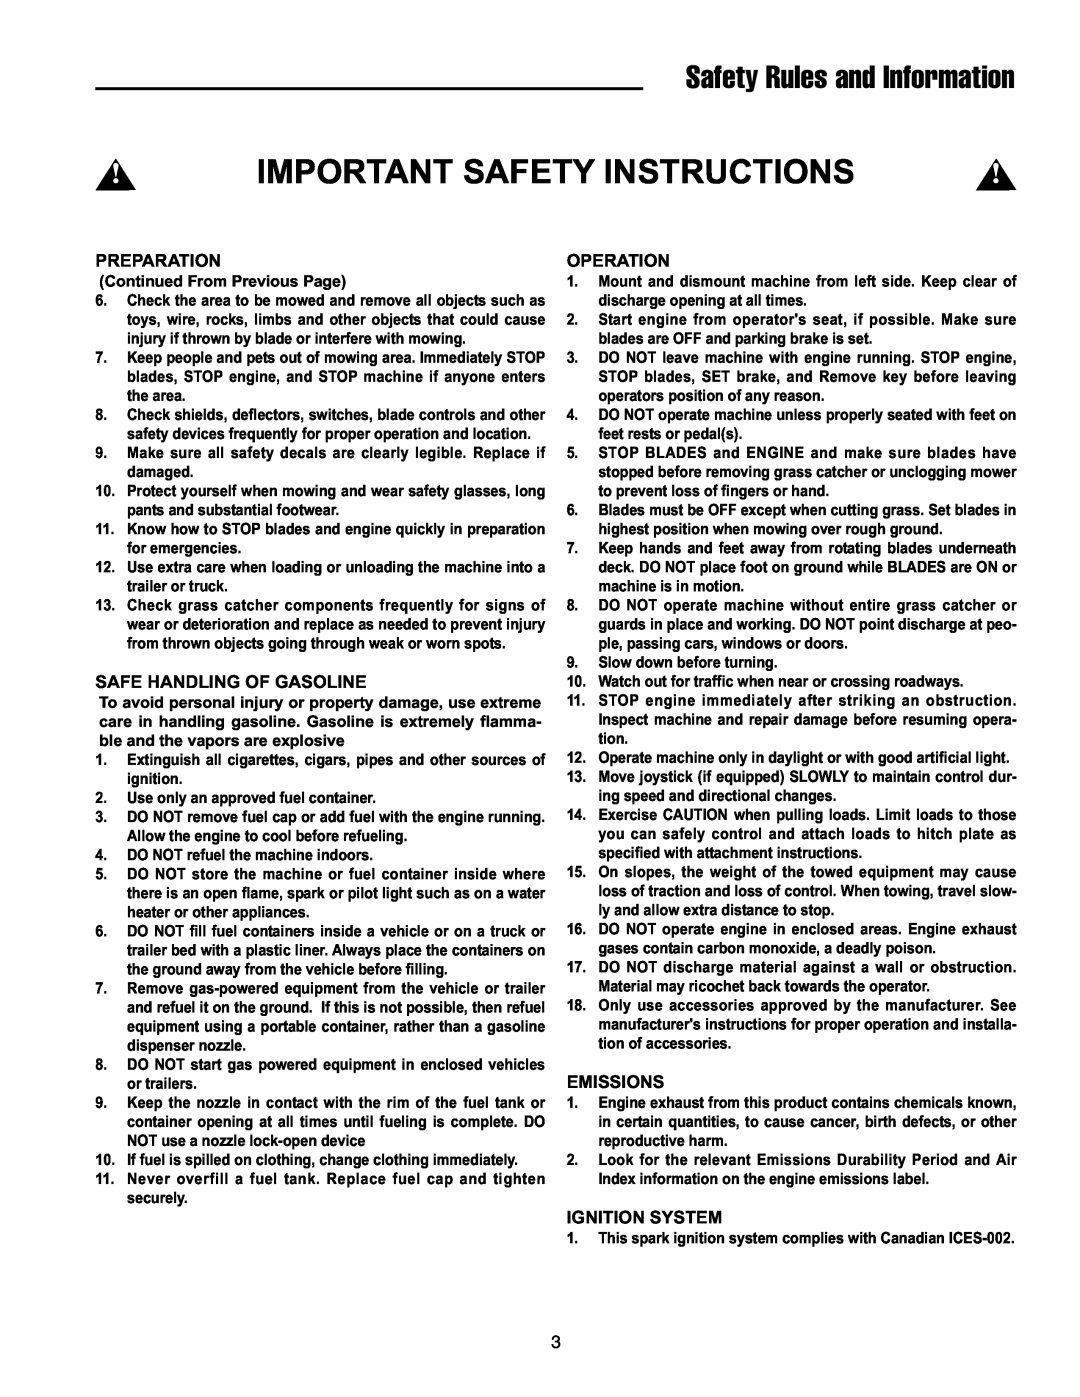 Snapper RZT22500BVE2 manual Safety Rules and Information, Safe Handling Of Gasoline, Operation, Emissions, Ignition System 